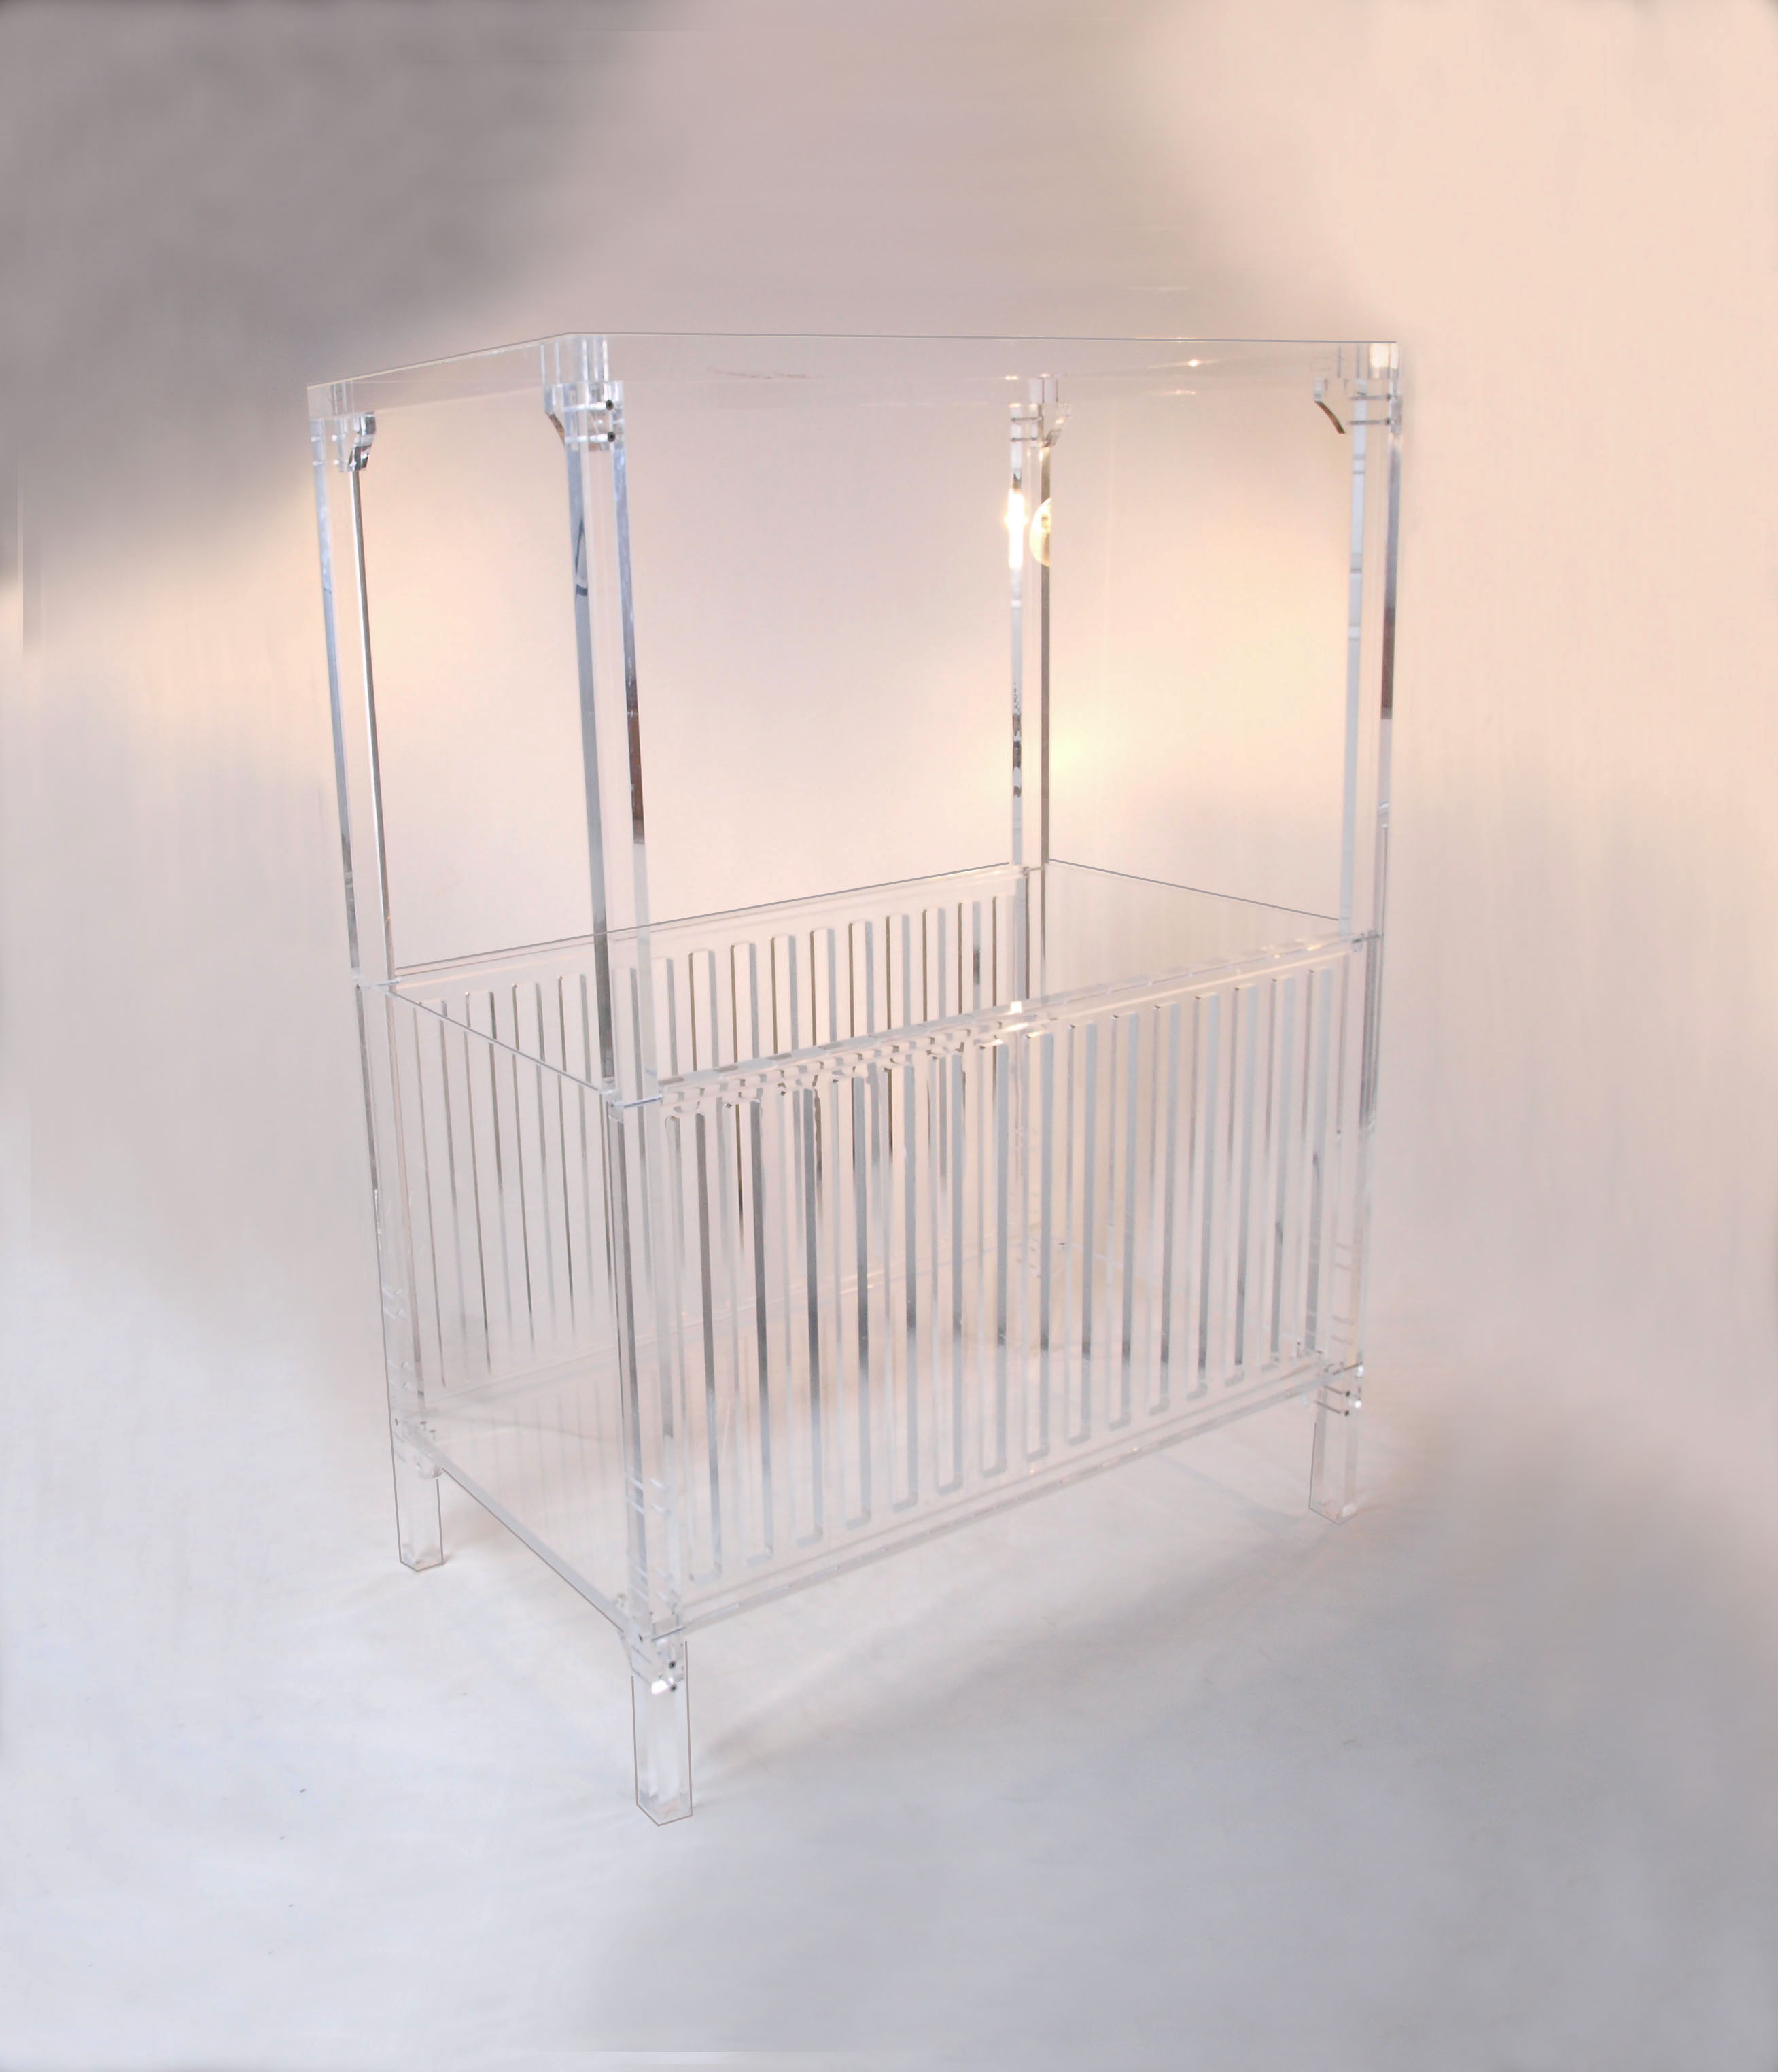 acrylic crib